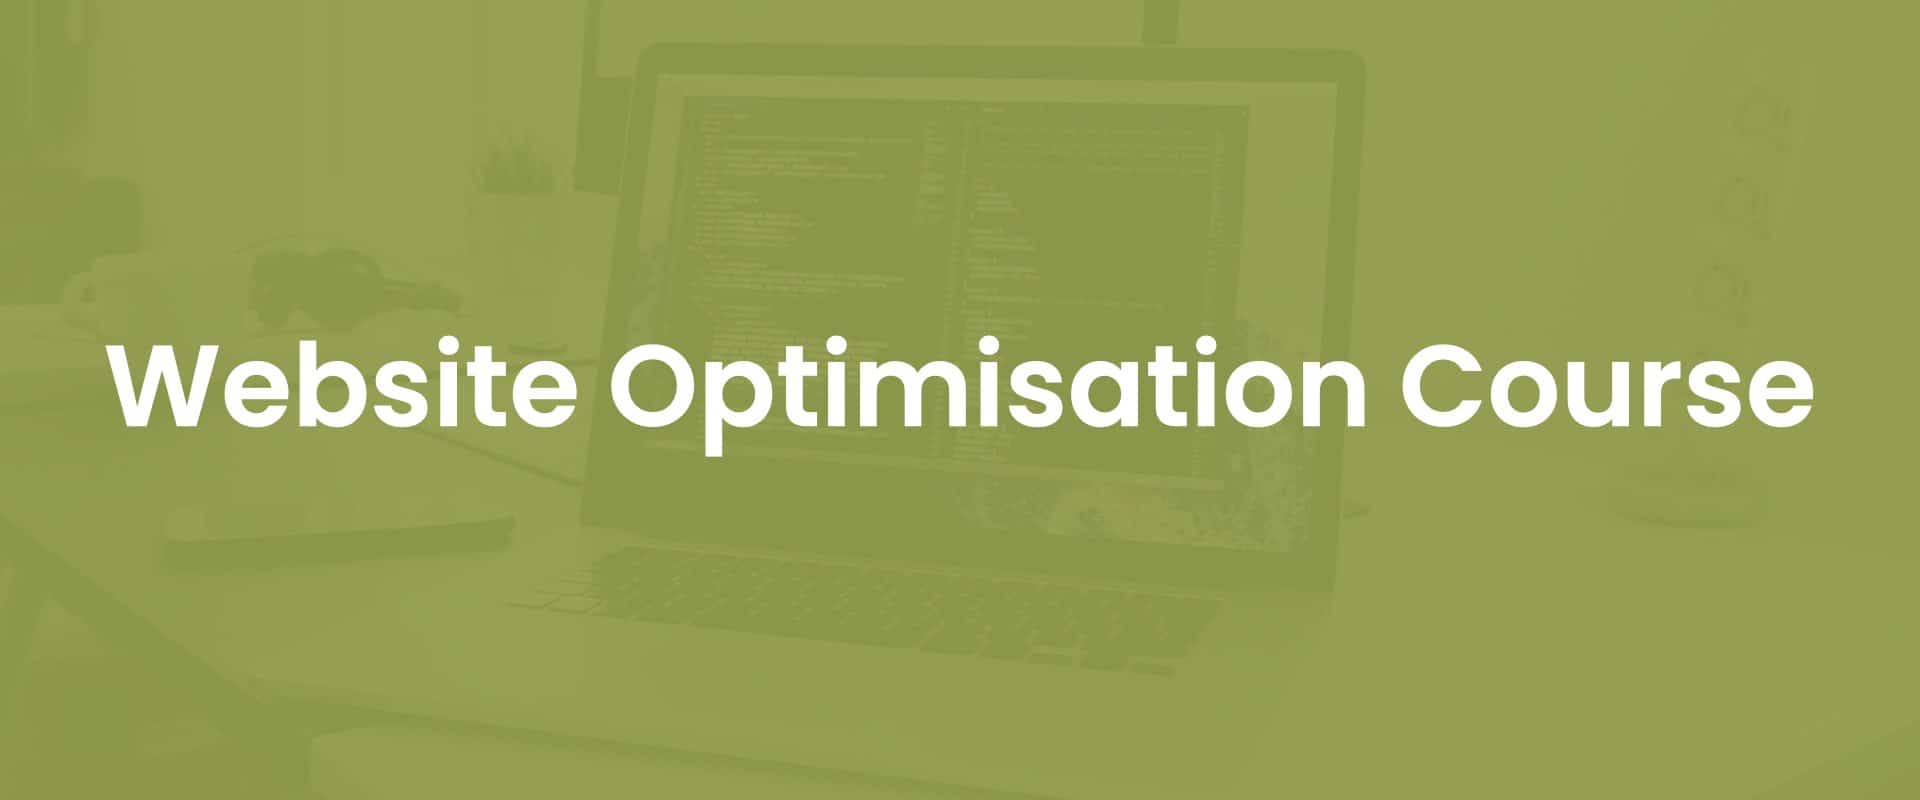 Website conversion rate optimisation course cover